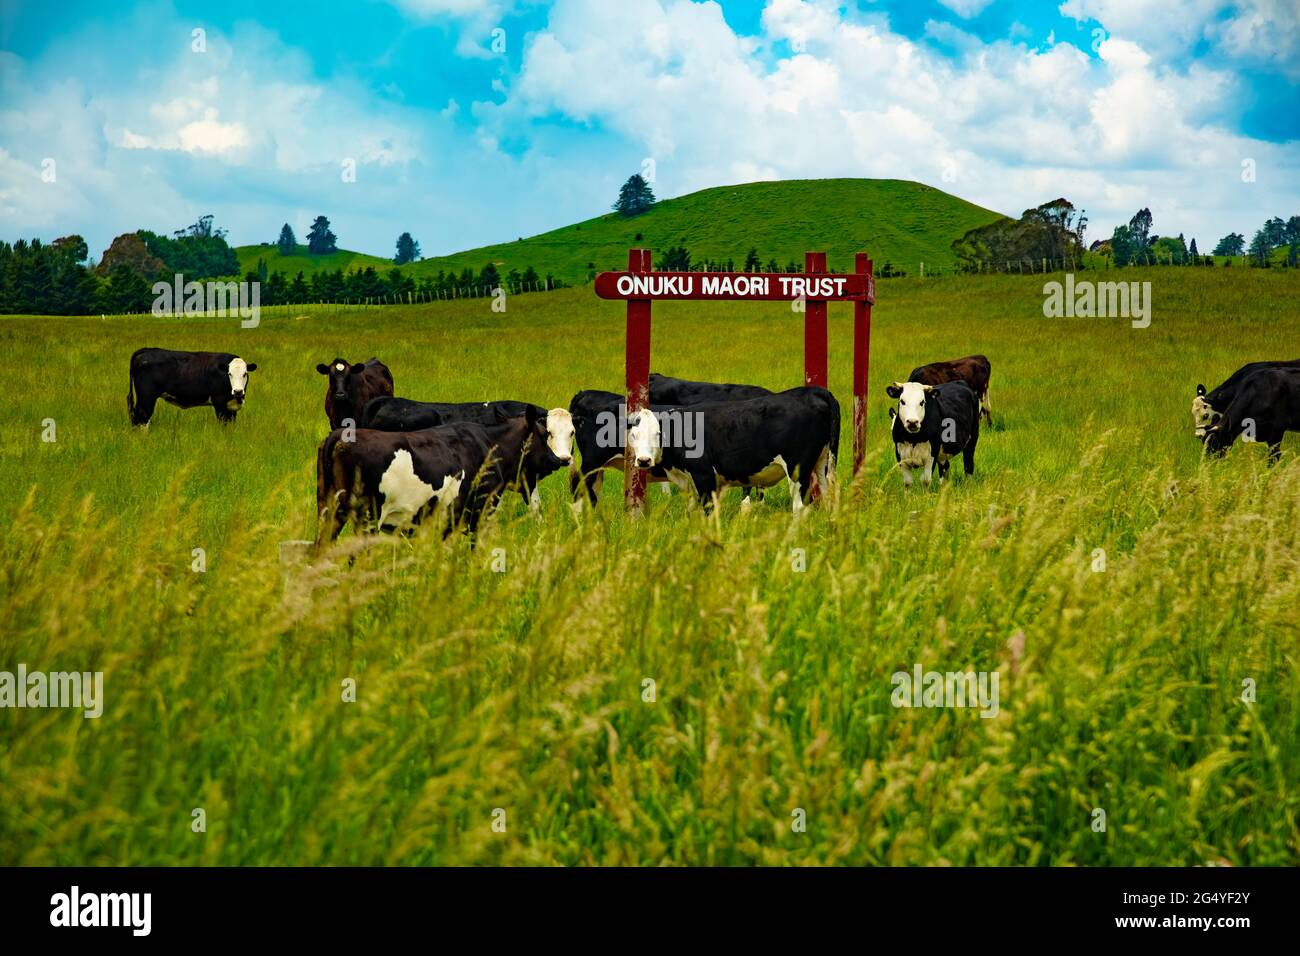 Dairy cows in a farmland of Onuku Maori Lands Trust . Taken in Aotearoa, New Zealand on Nov 29, 2011. Stock Photo